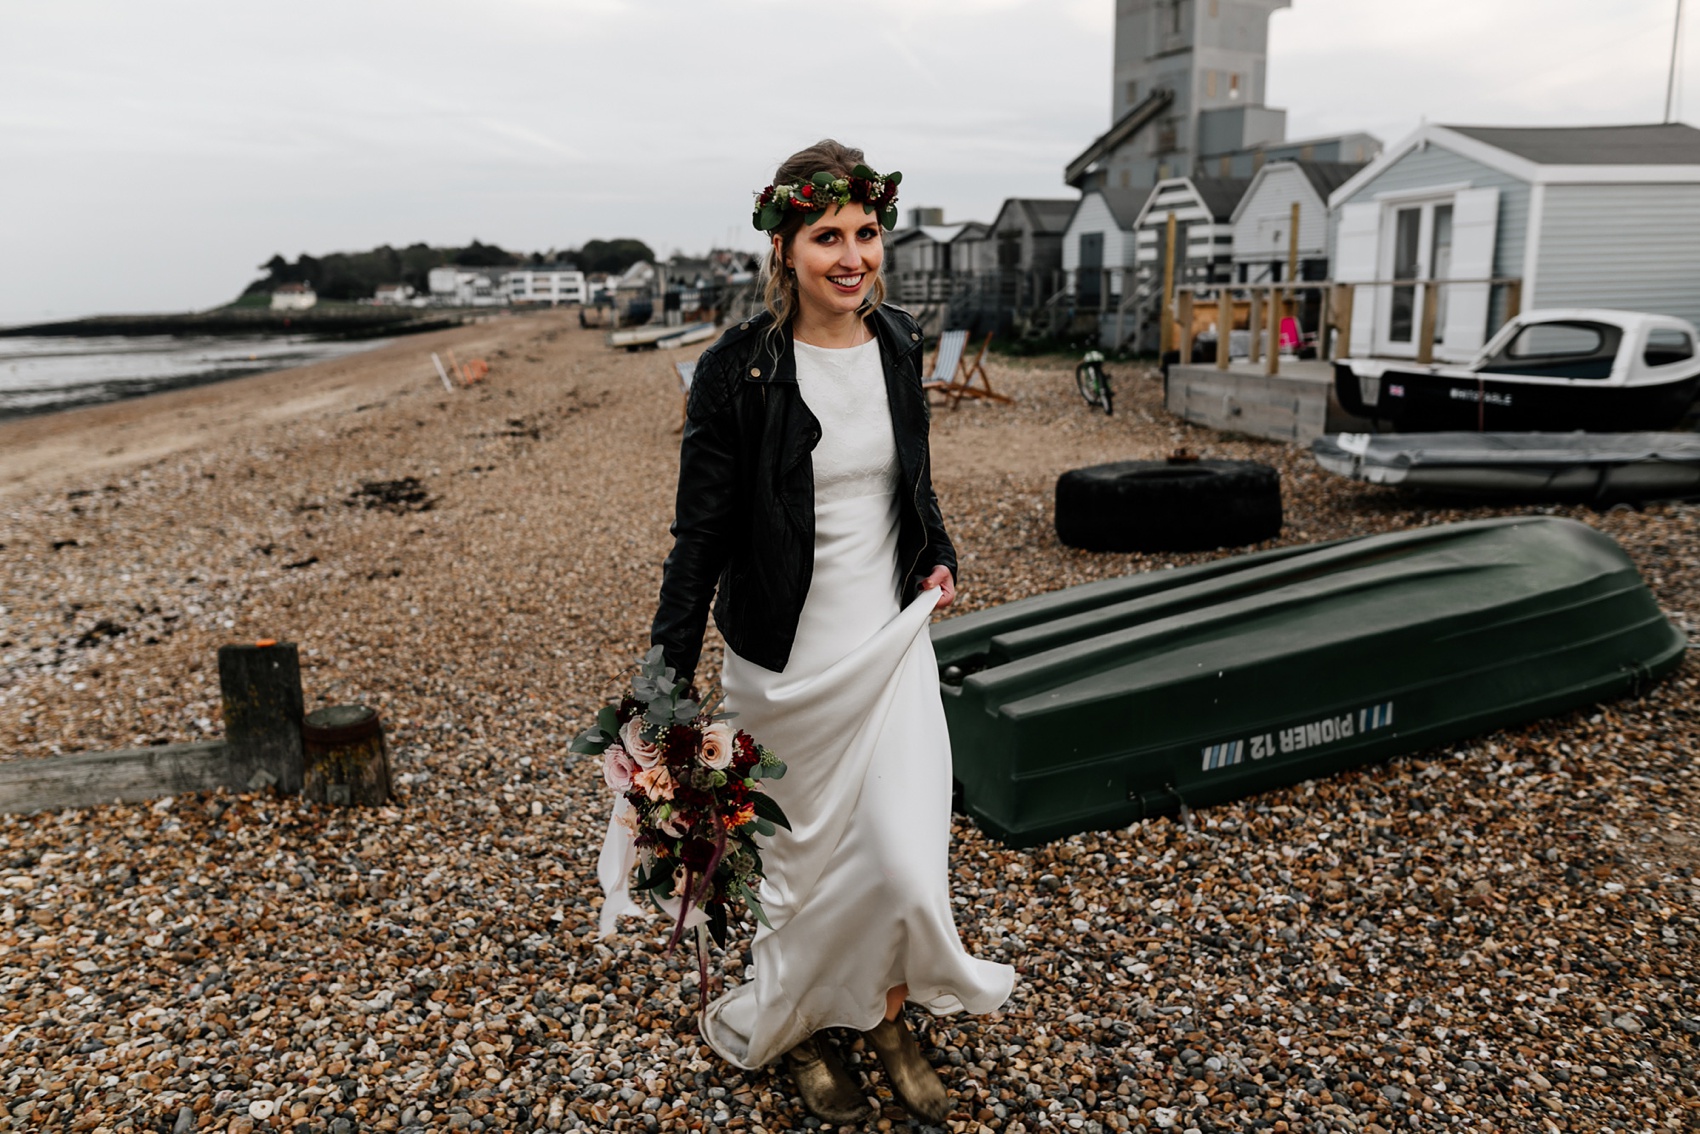 46 Rolling in Roses Dress seaside wedding Whitstable Kent